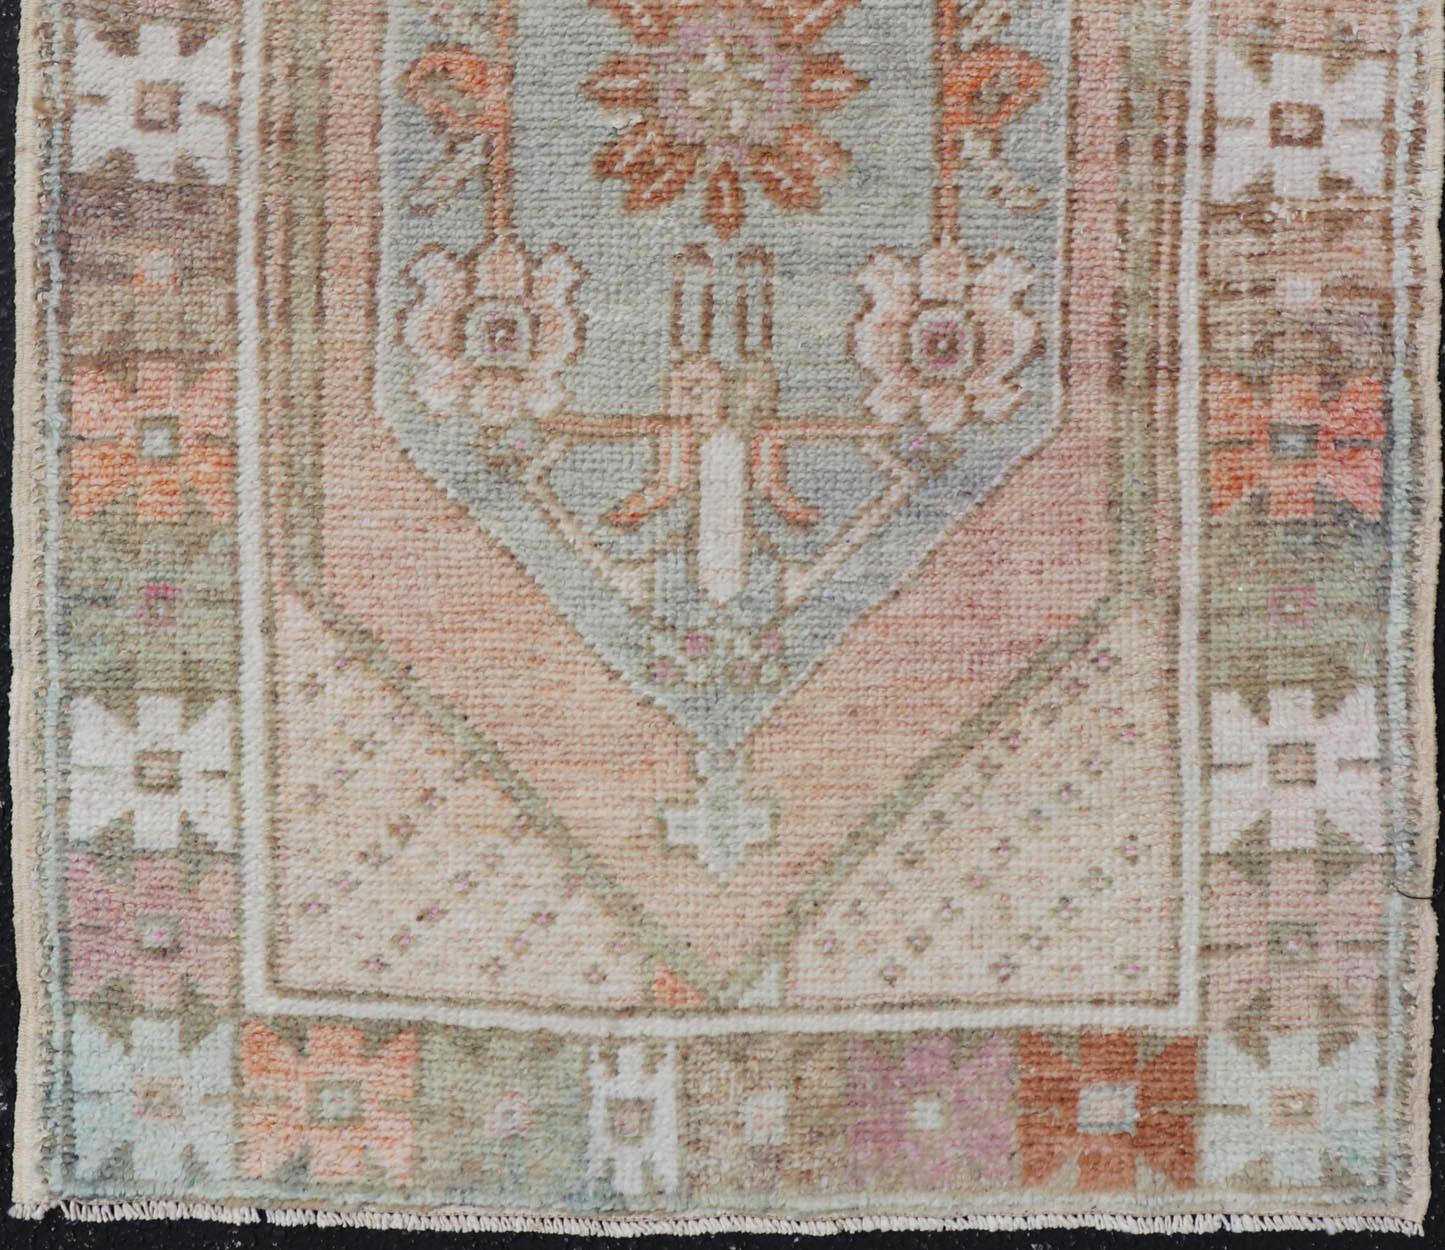 20th Century Vintage Turkish Oushak Carpet with Beautiful Floral Motifs in Tan, Camel, Orange For Sale